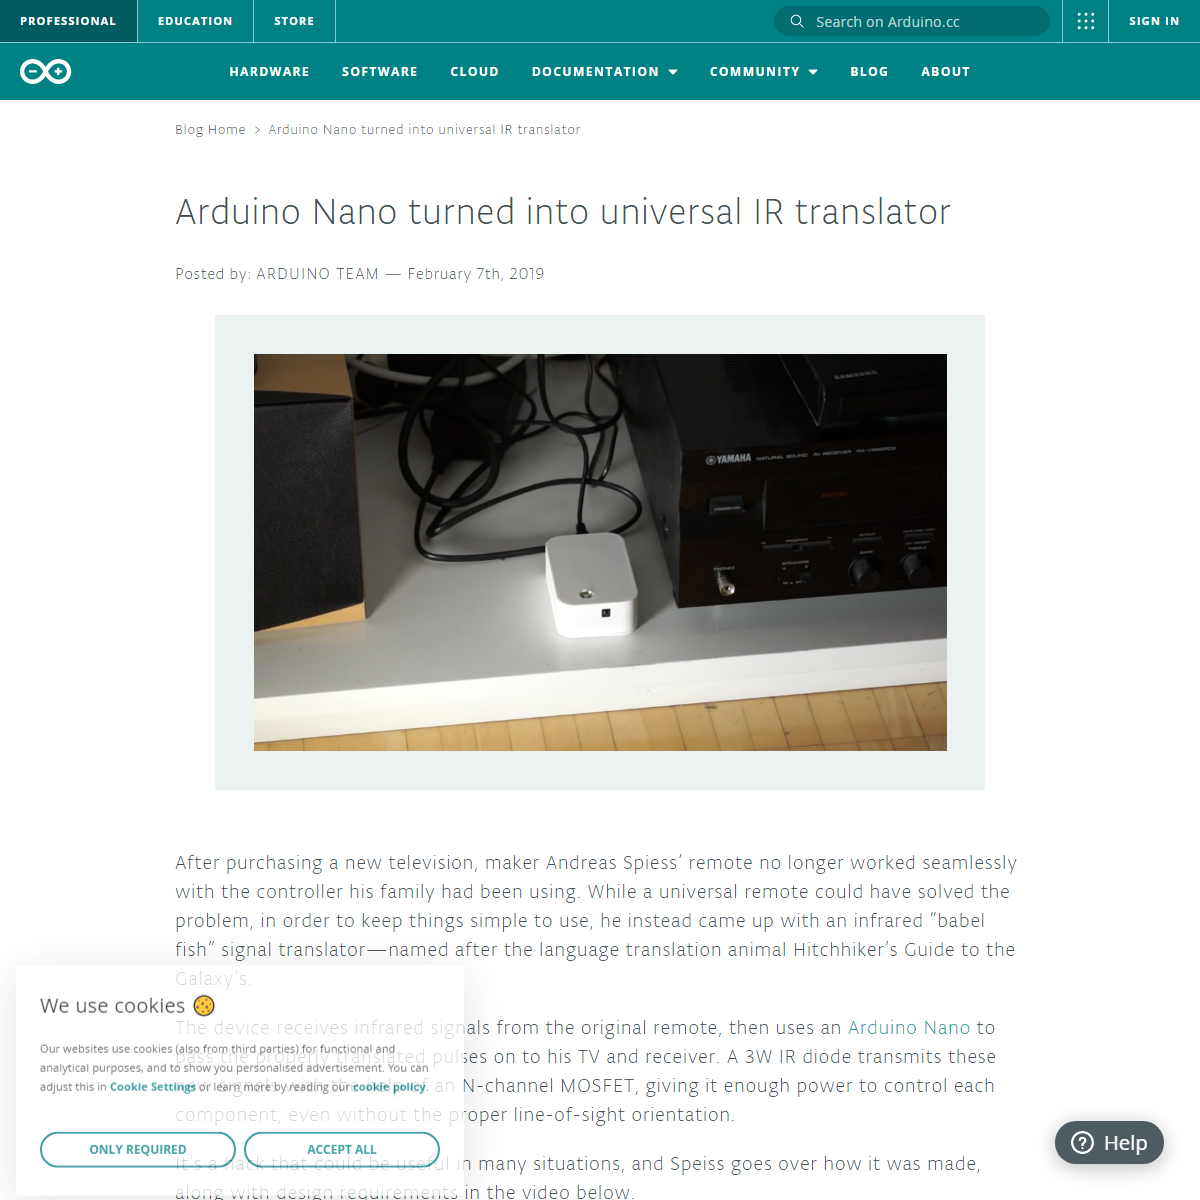 A complete backup of https://blog.arduino.cc/2019/02/07/arduino-nano-turned-into-universal-ir-translator/